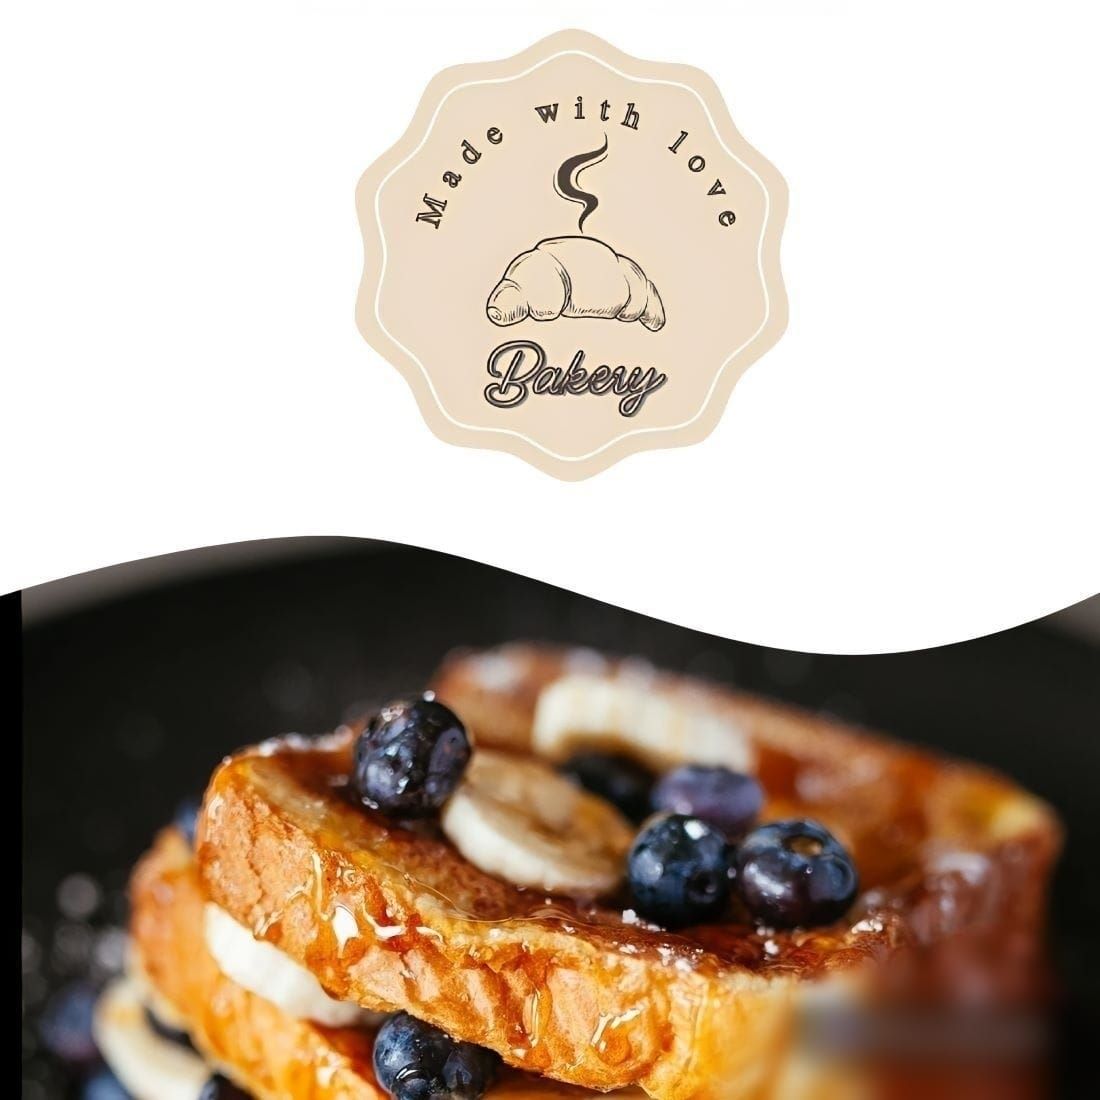 Bakery logo cover image.